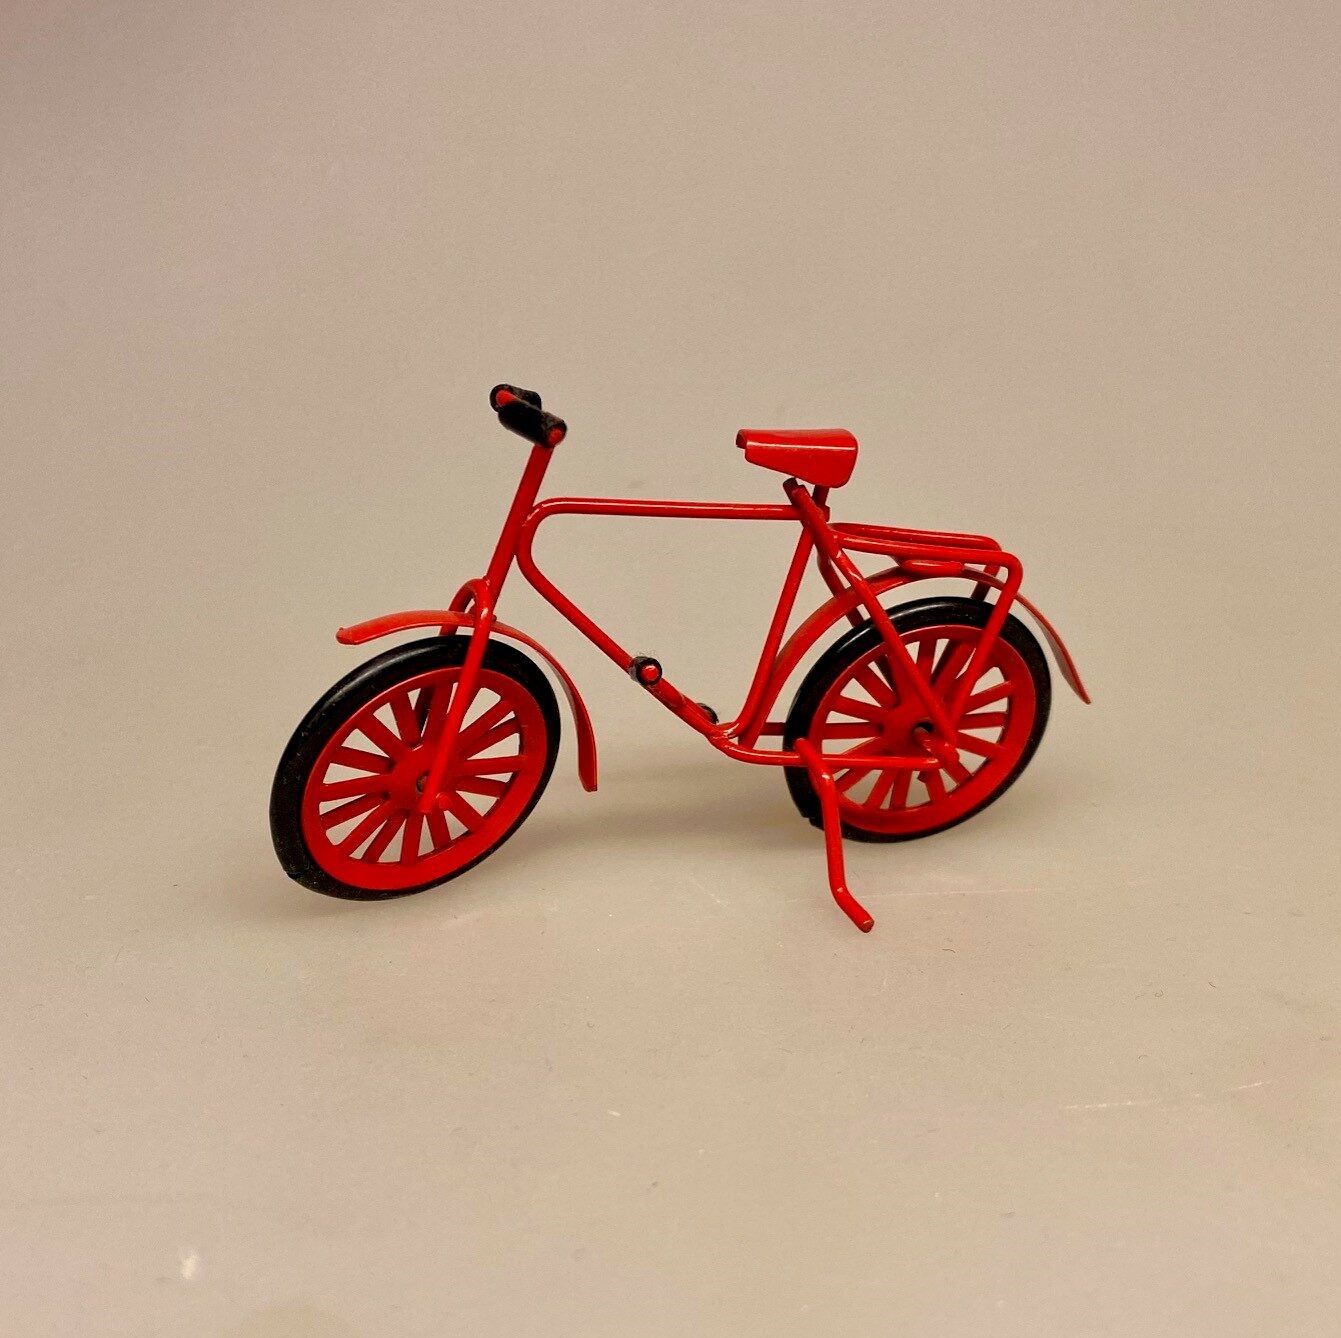 Kun én af Hver - Miniature Børnecykel, cykel, barnecykel, dukkehus, ting, til, tilbehør, legetøj, dukkehustilbehør, dukkehusting, sangskjuler, konfirmation, sjov, miniature, cykel, børn, biti, ribe, symbolsk, gave pigecykel, drengecykel, 1:12